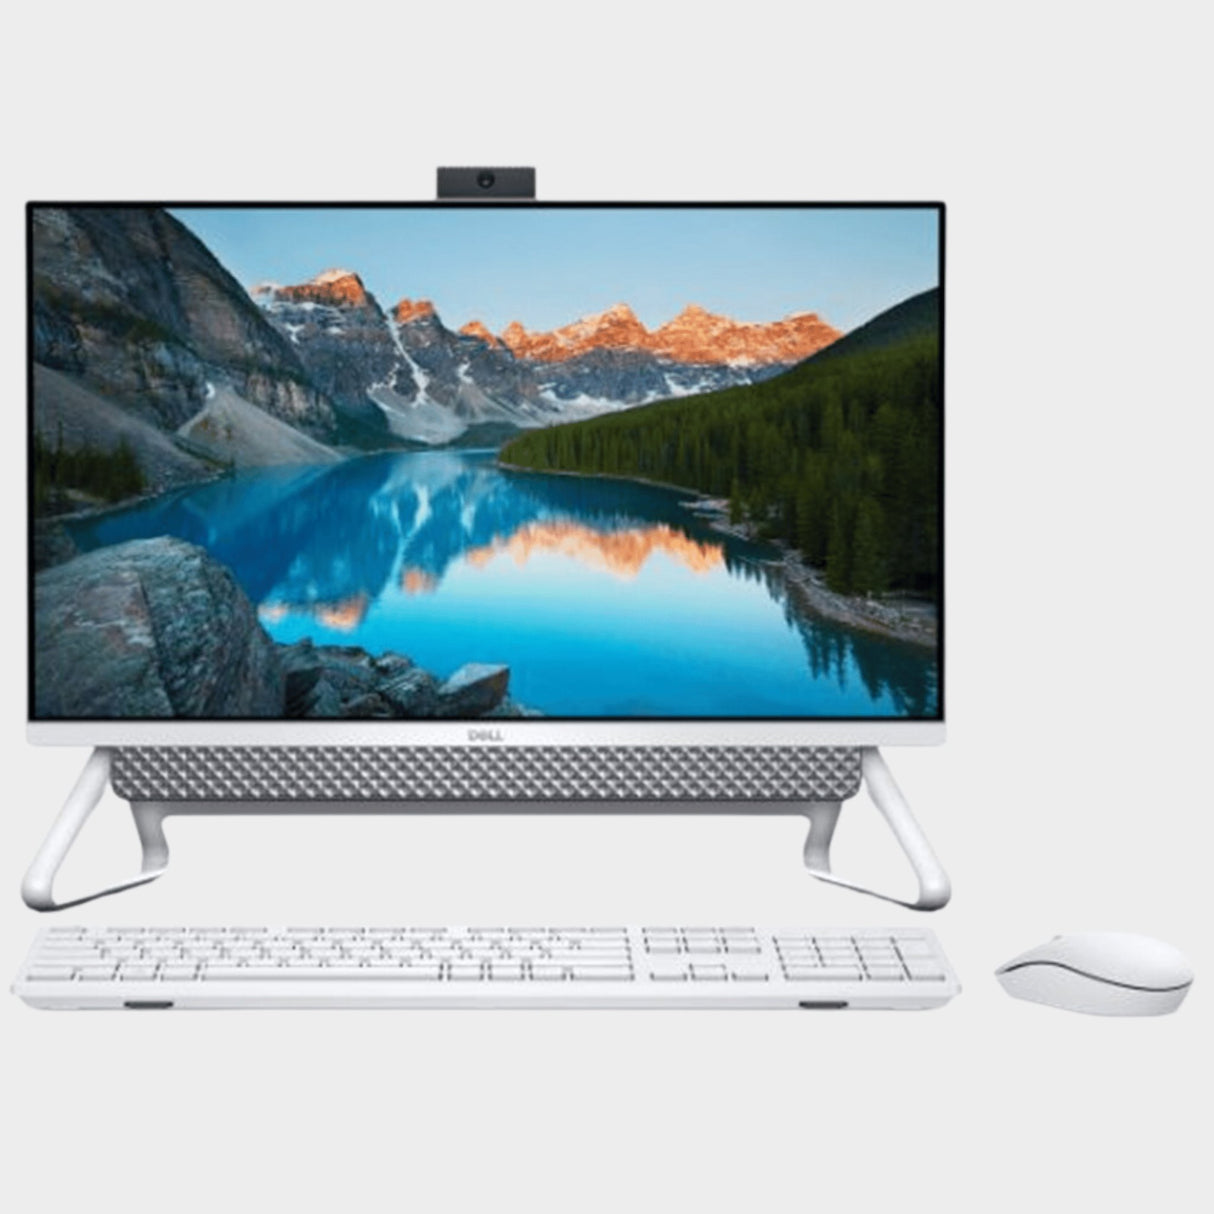 Dell Inspiron 5000 All-in-One Touchscreen Desktop, 512GB SSD - KWT Tech Mart